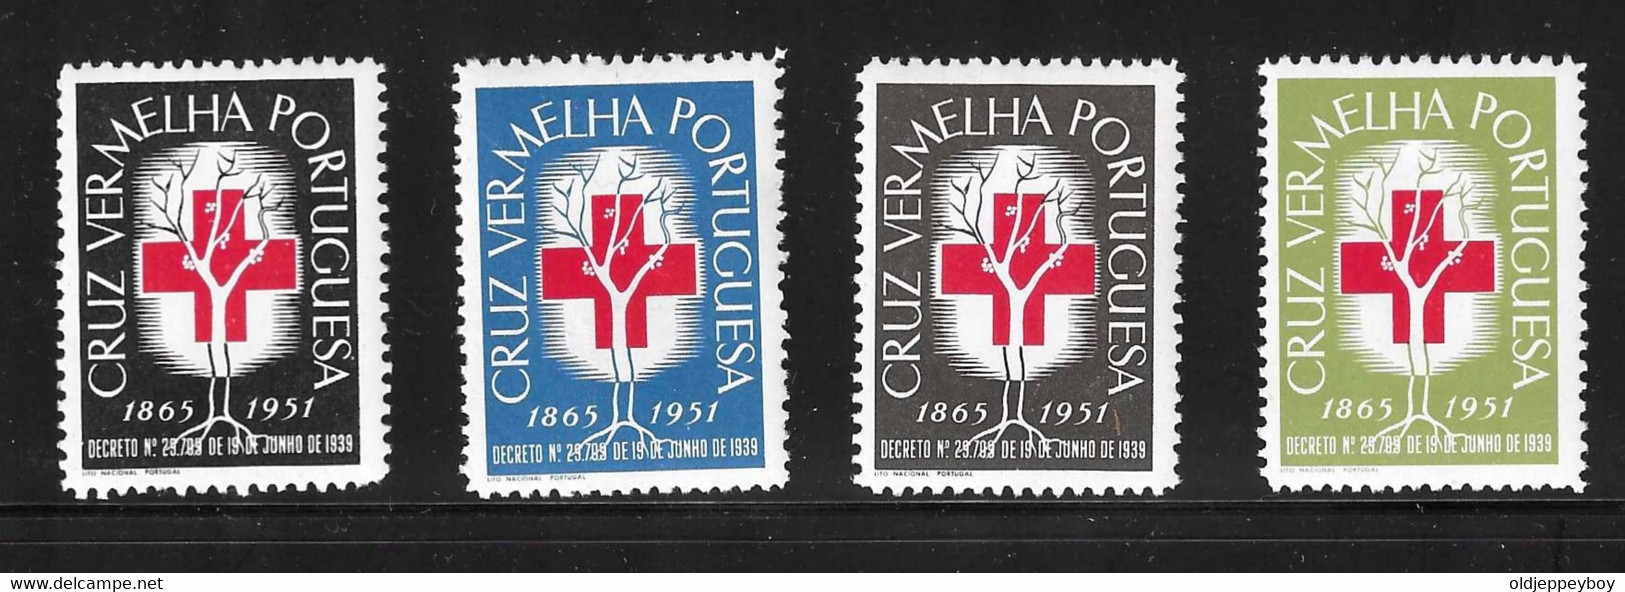 1951 PORTUGAL VIGNETTE RED CROSS CROIX ROUGE TIPO "ARVORE" TREE CRUZ VERMELHA PORTUGUESA MINT - Croce Rossa